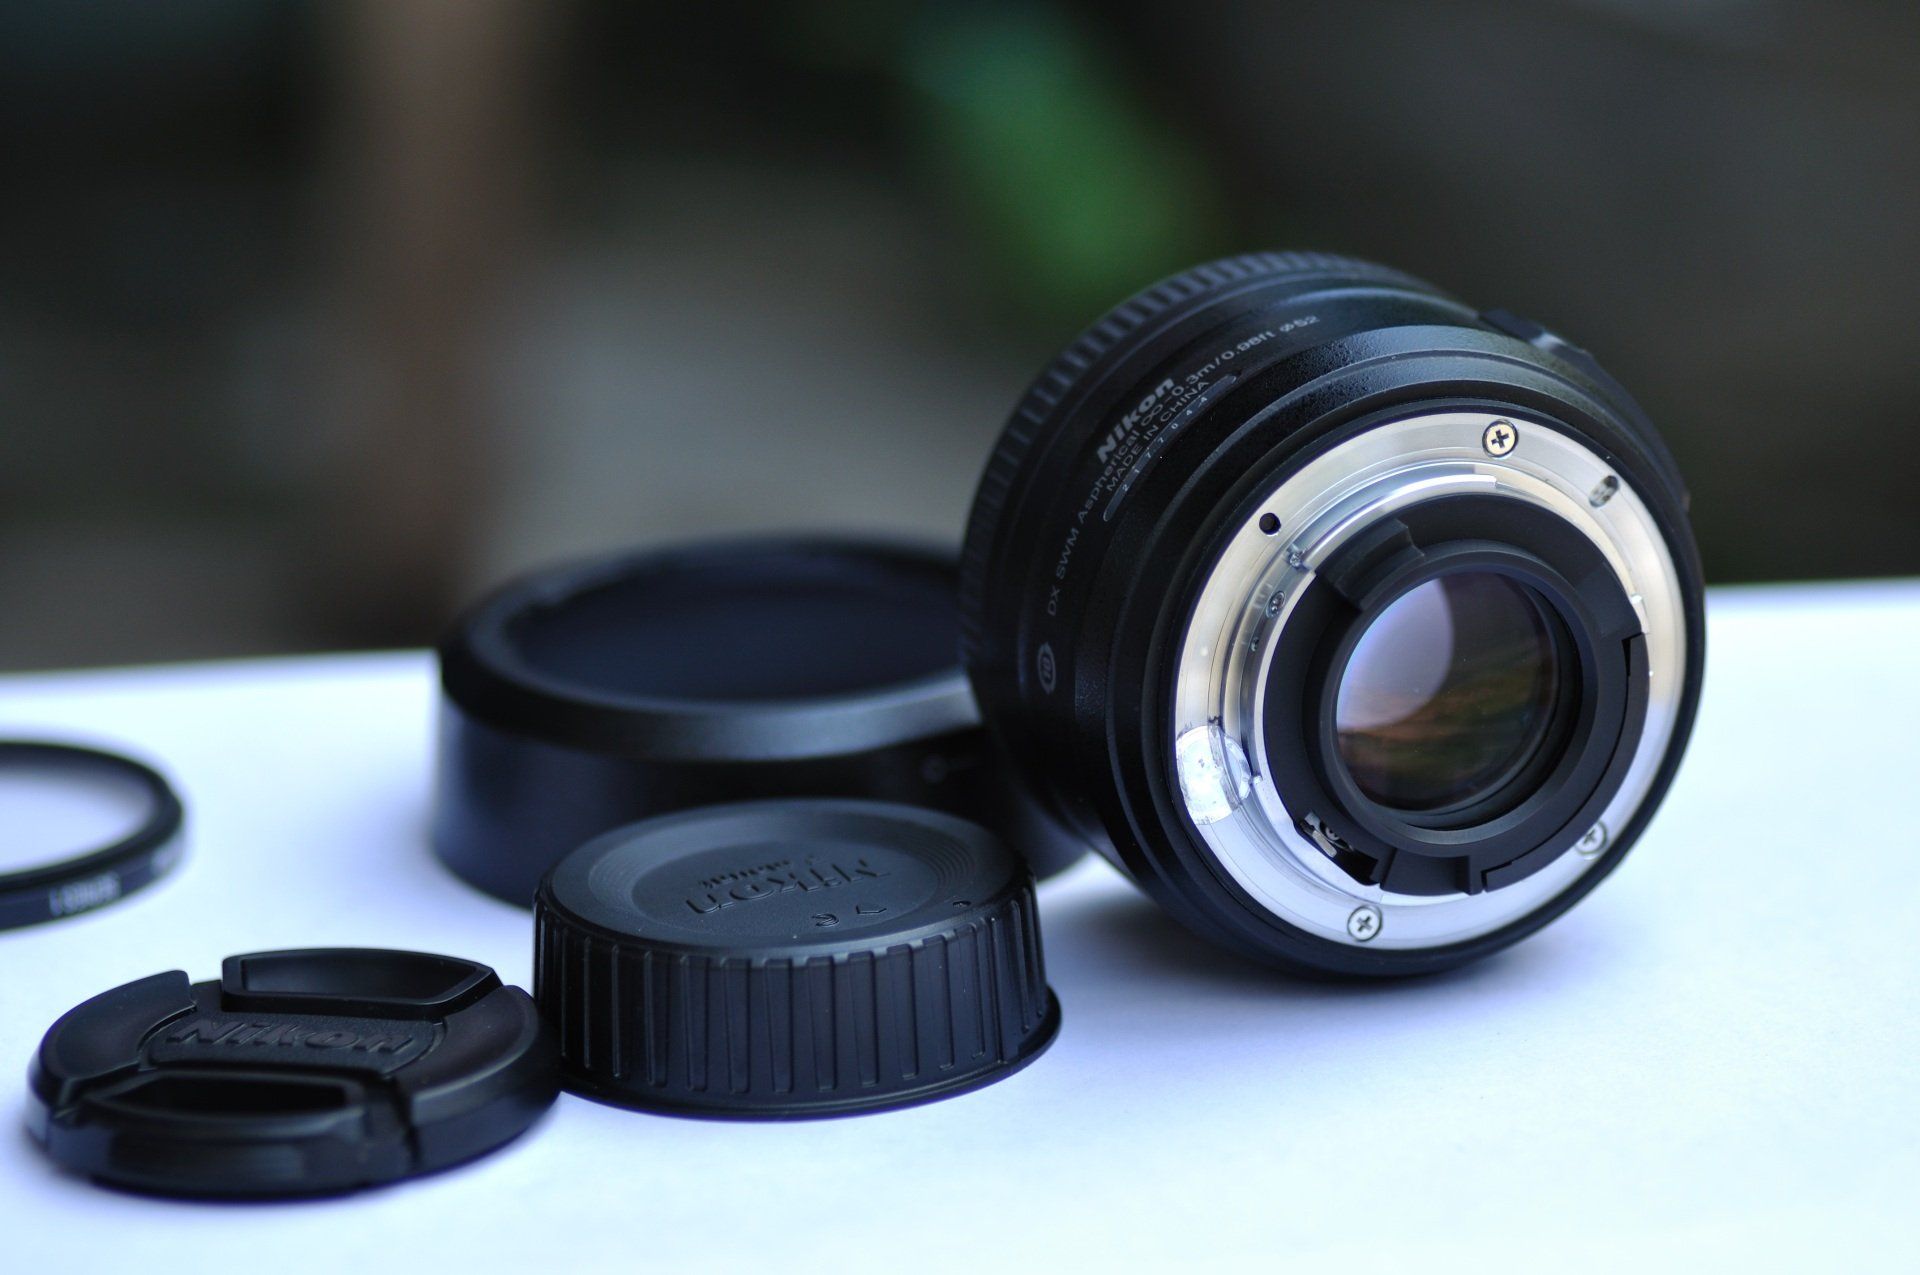 a nikon camera lens sits on a white surface